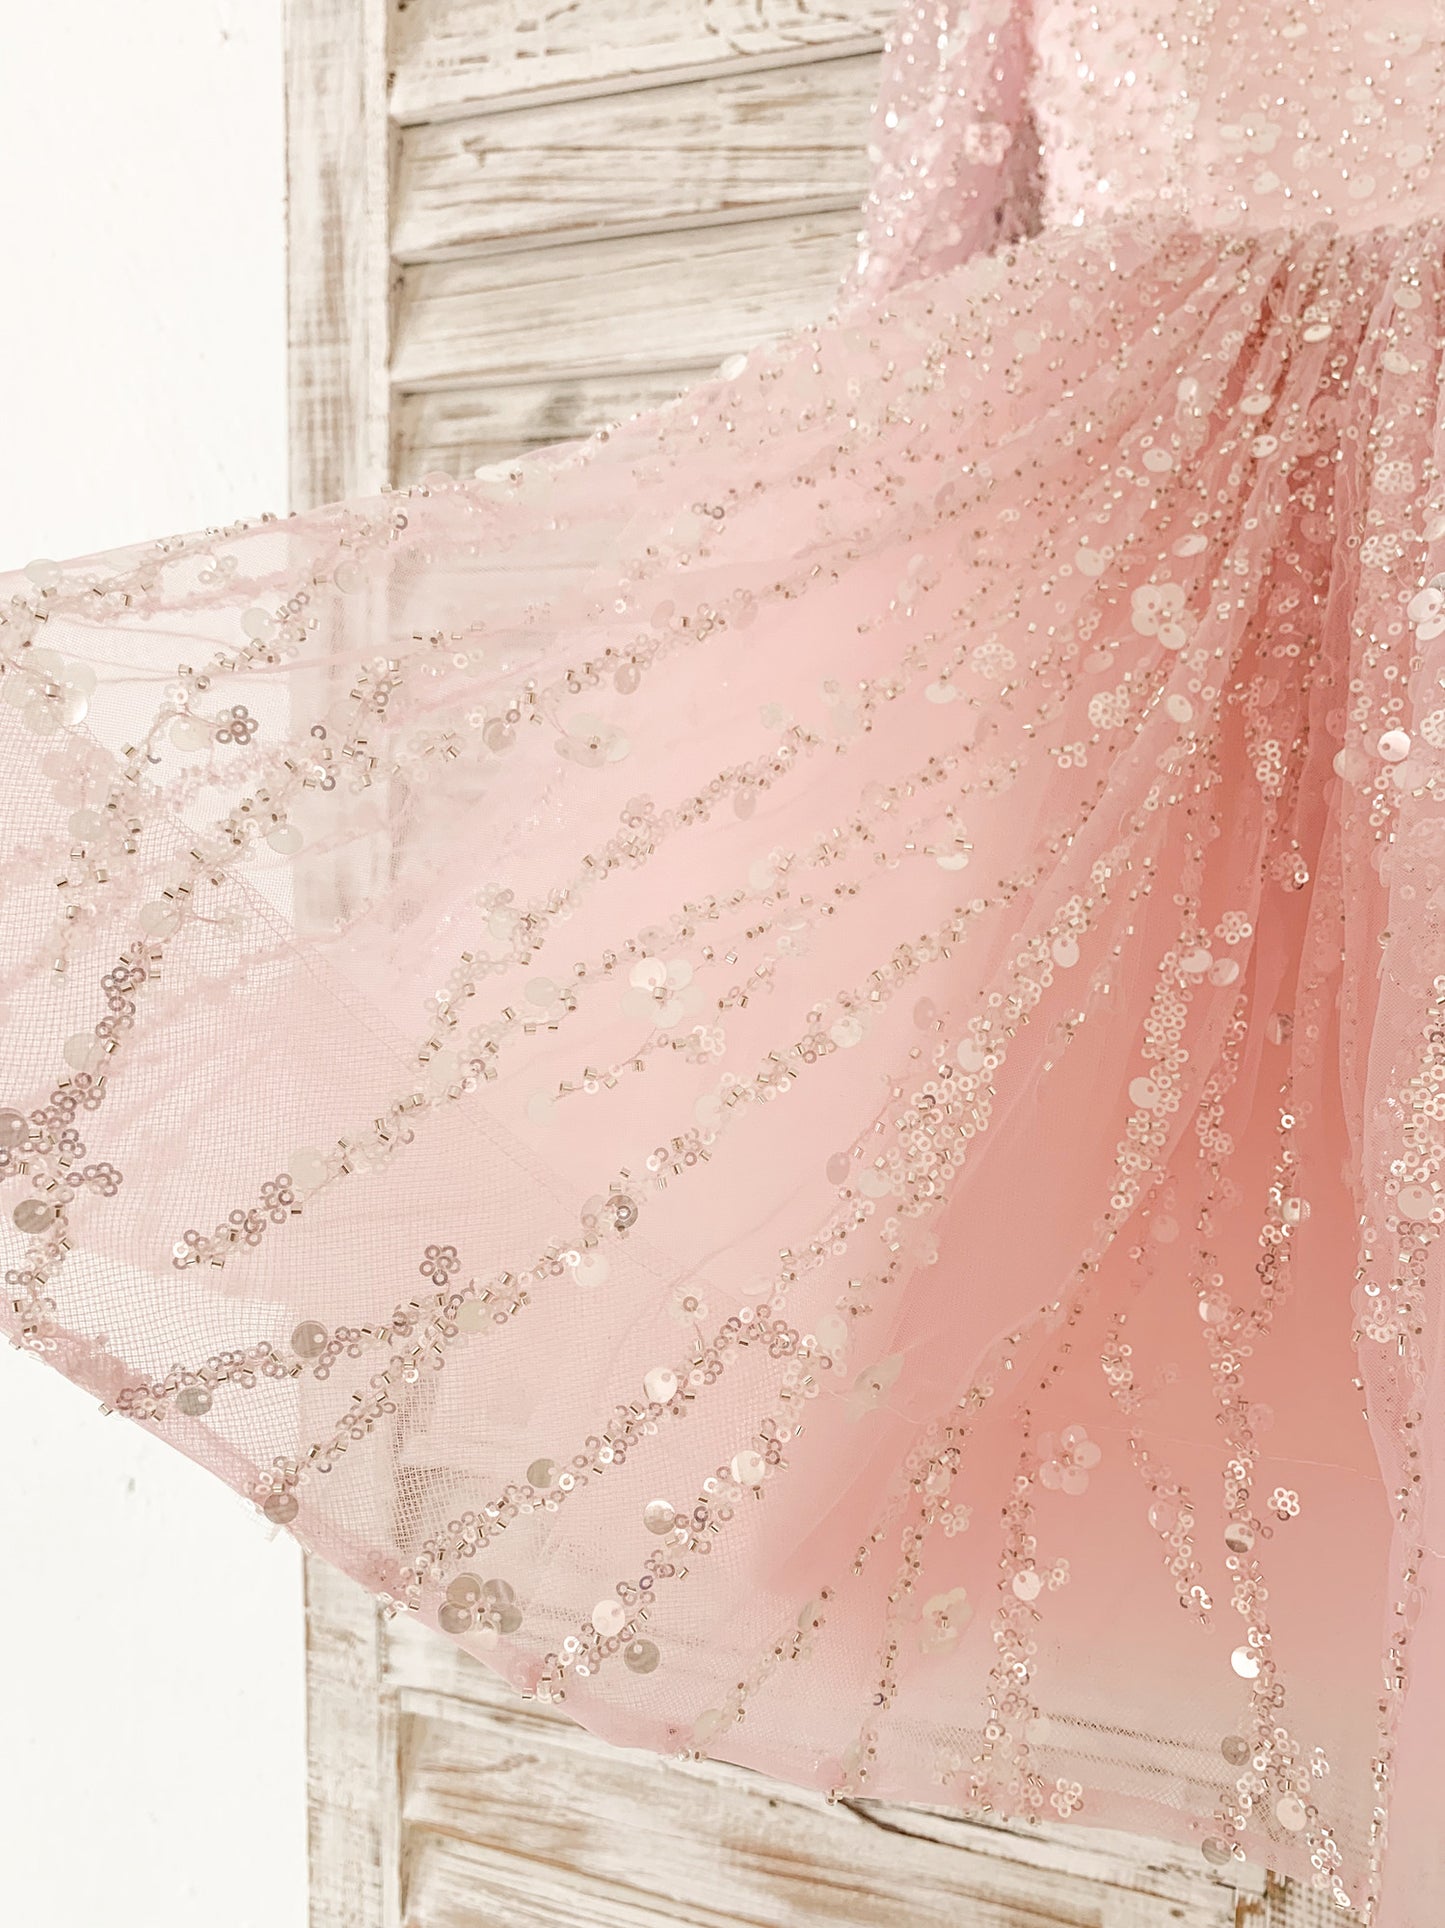 Long Sleeves Pink Crystal Beaded Wedding Flower Girl Dress Birthday Party